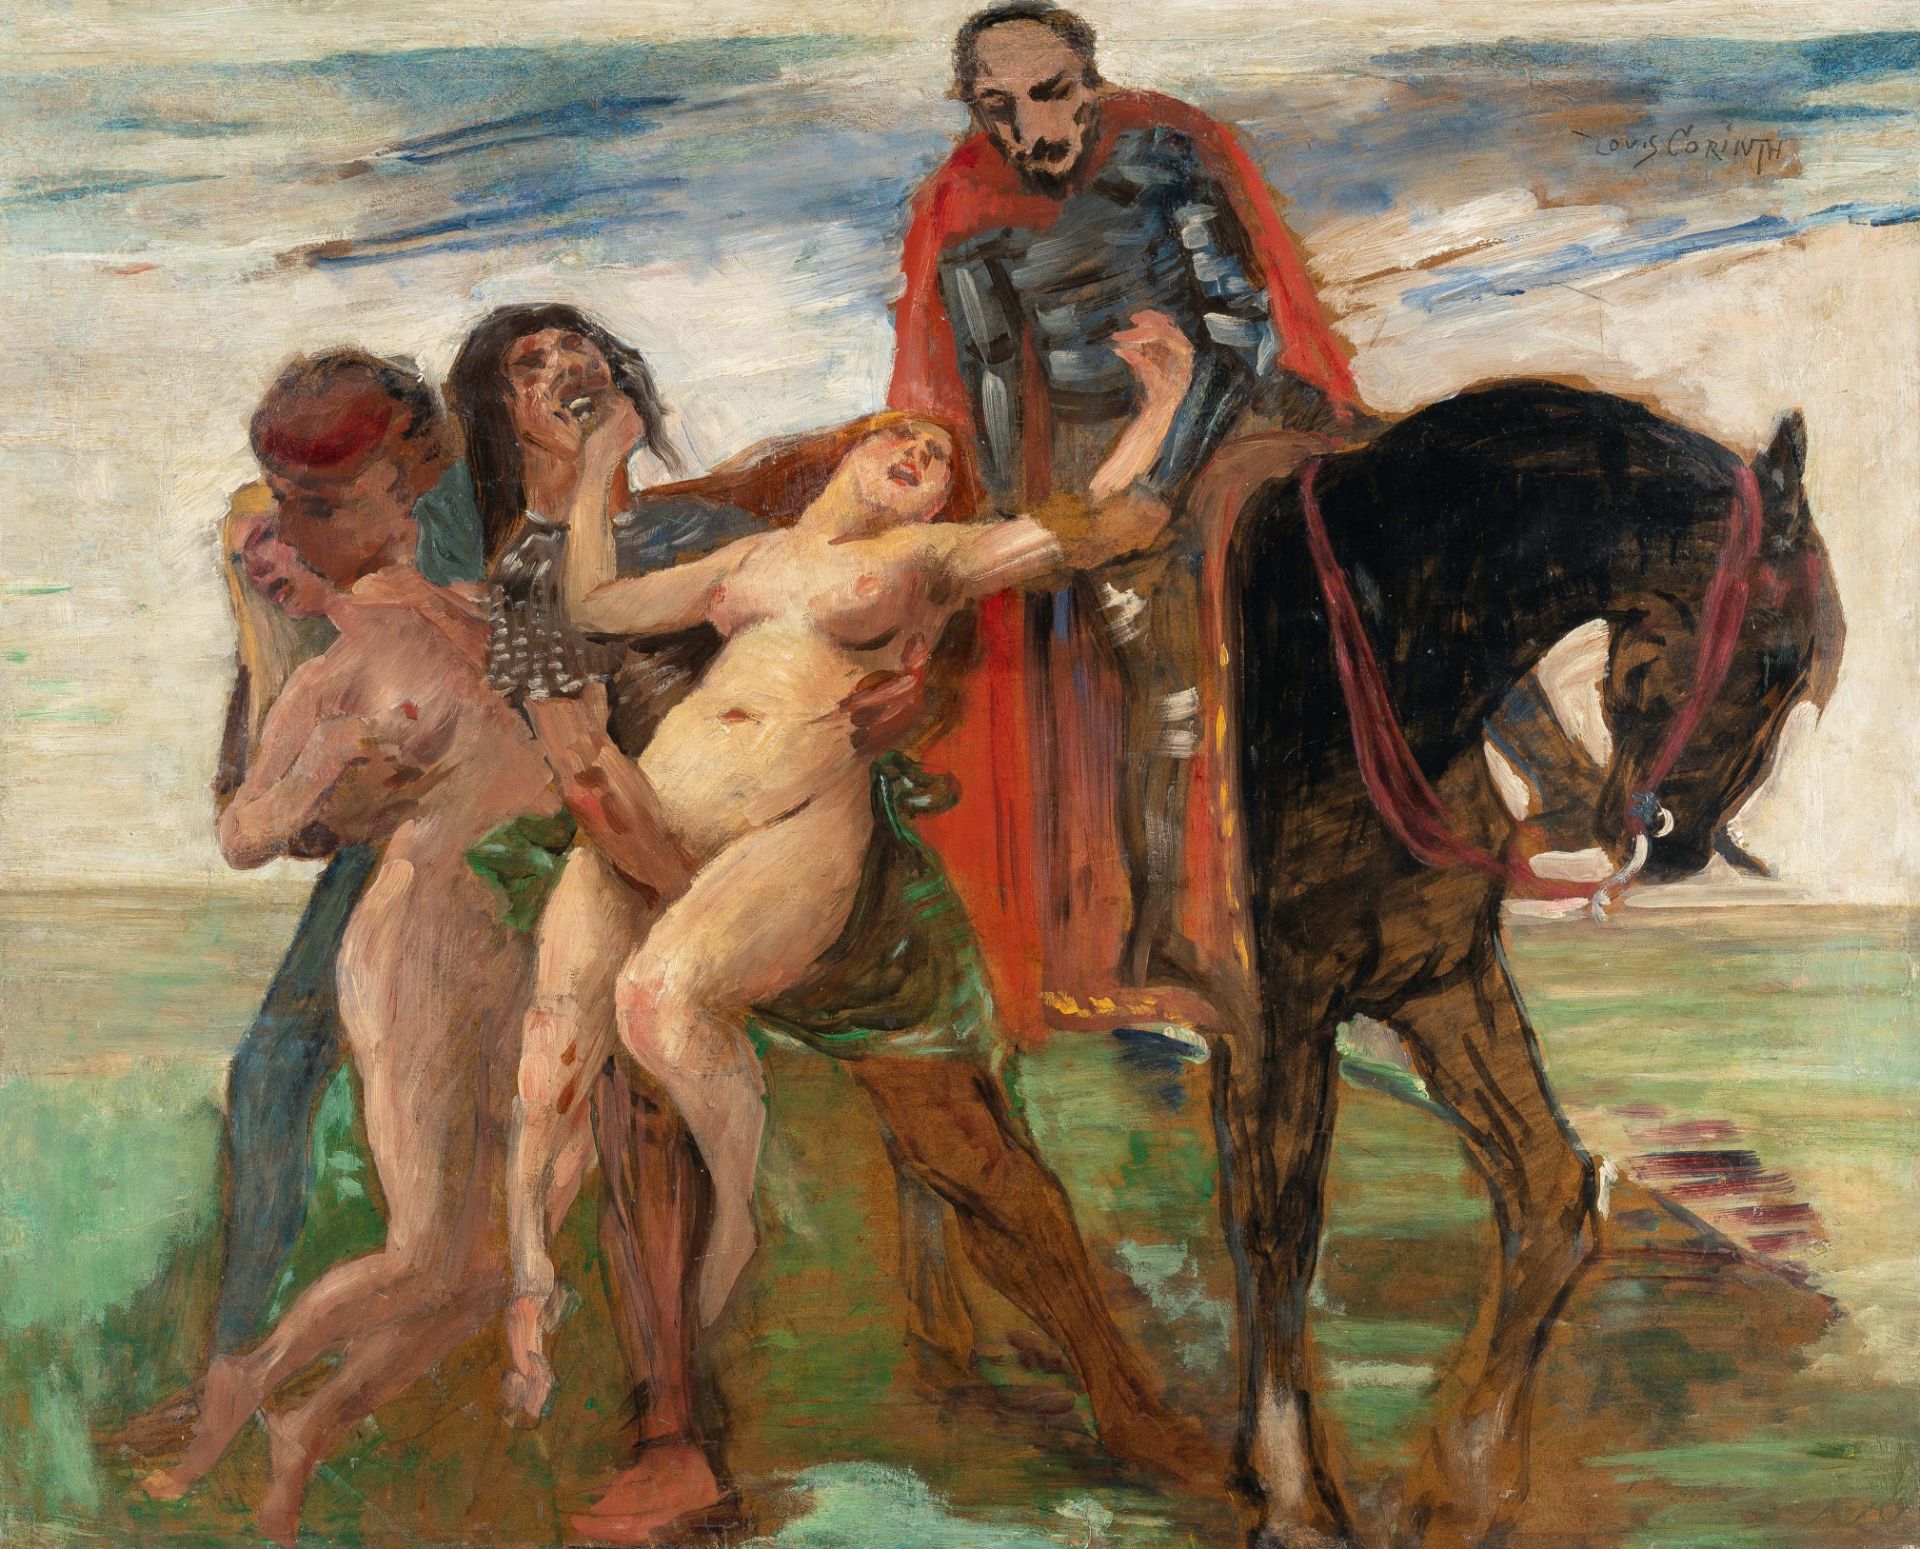 Lovis Corinth (1858 Tapiau/Ostpreußen - Zandvoort 1925), Abduction scene – Design (Rape of the